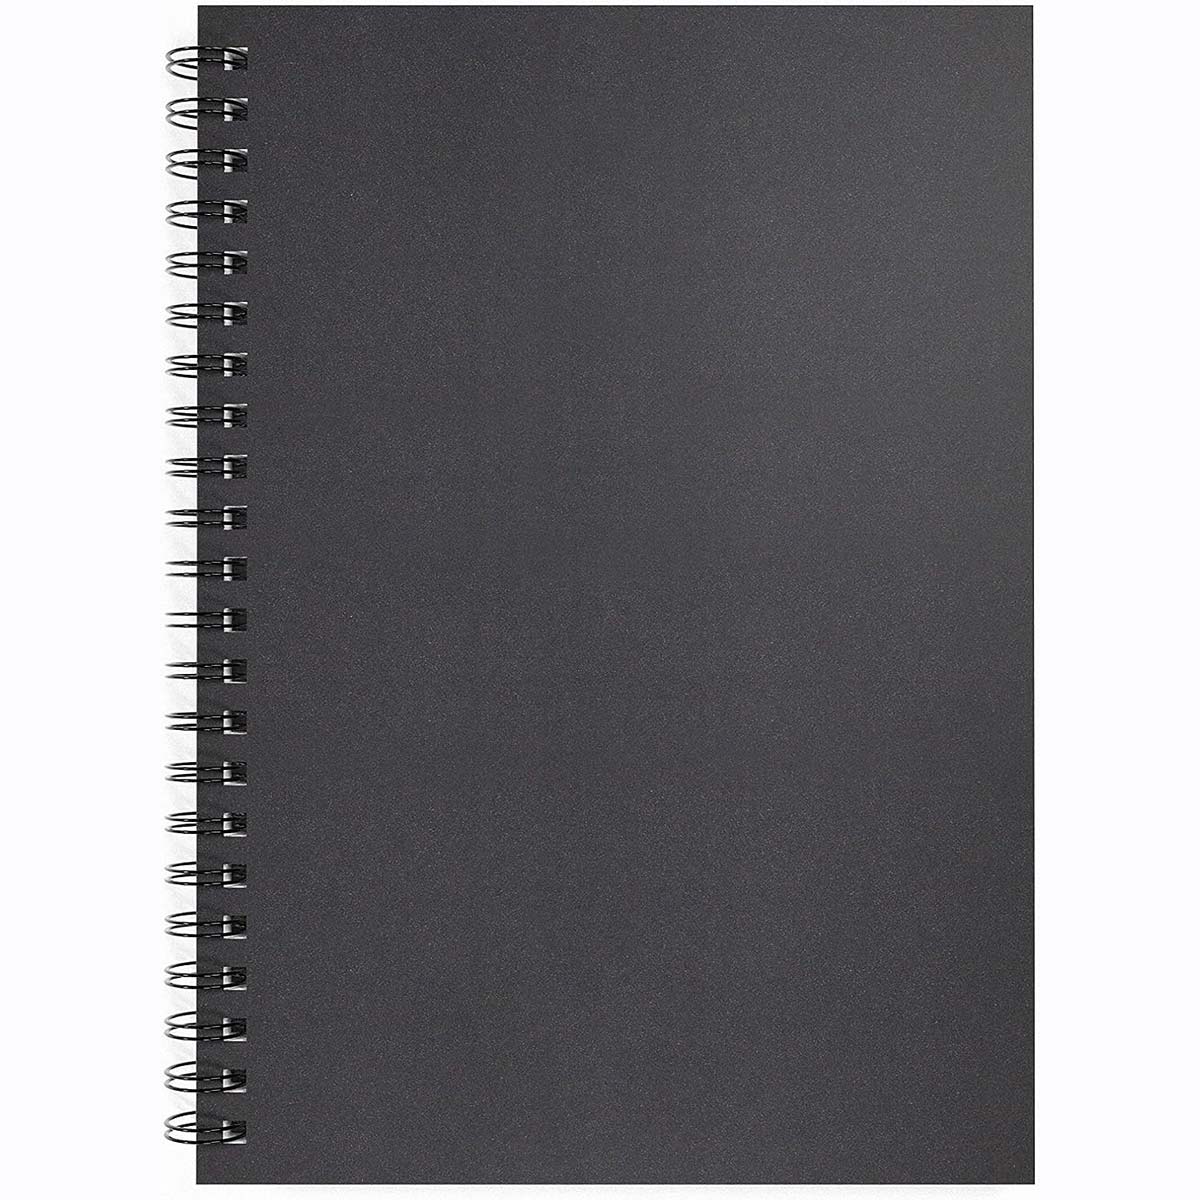 Artgecko - Stocky Black & White Paper Sketchbook Mixed Media -  A4 Portrait